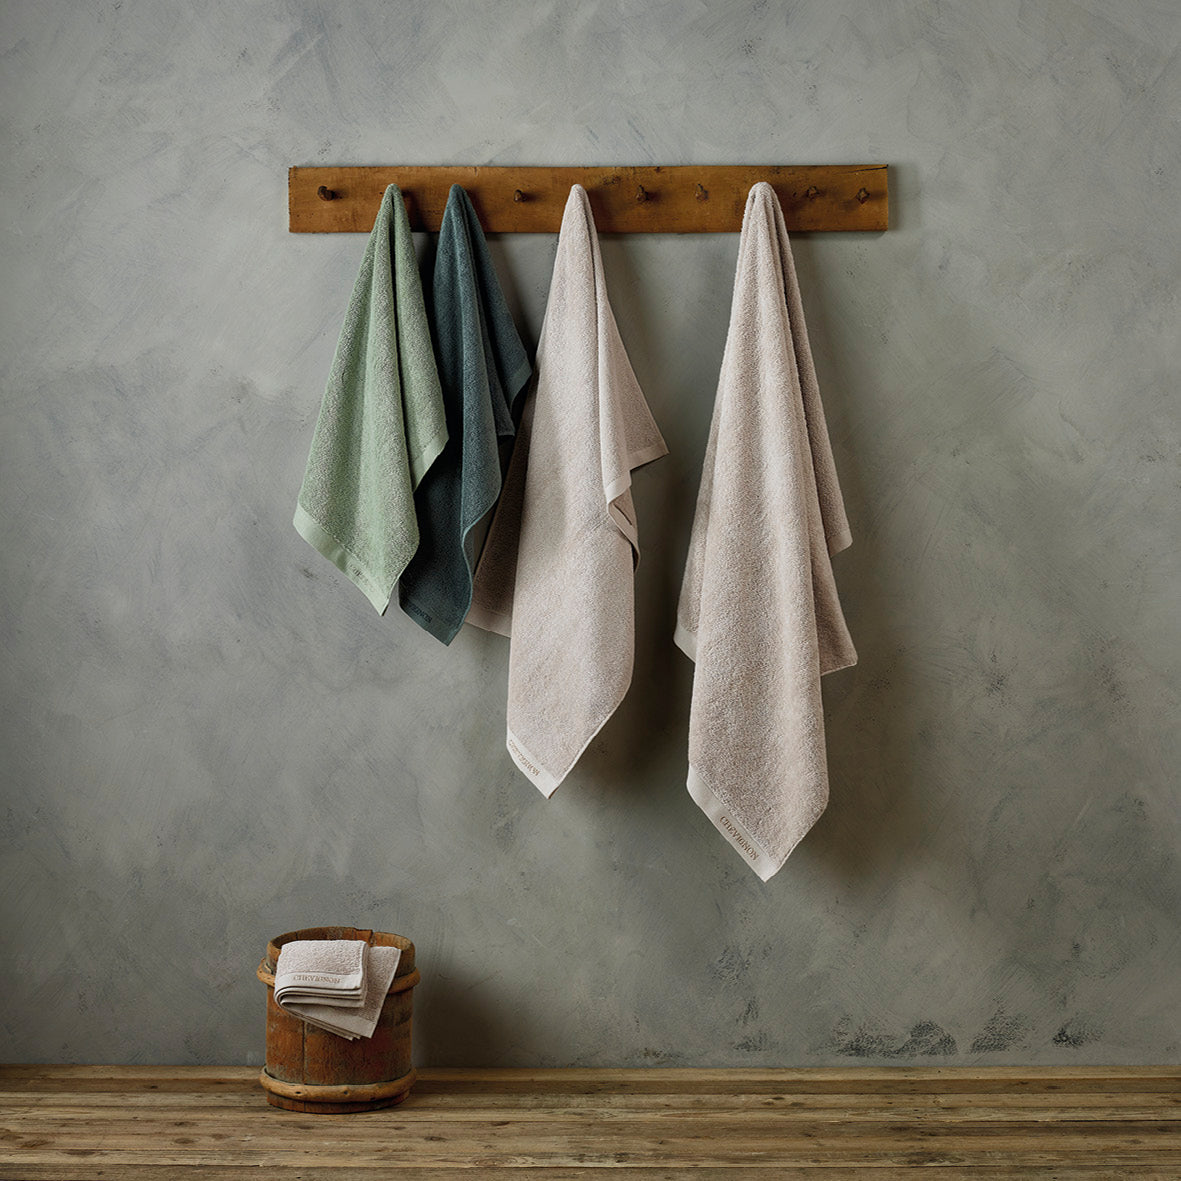 Set of 2 hand towels + 2 bath towels - 50 x 100 cm + 70 x 140 cm